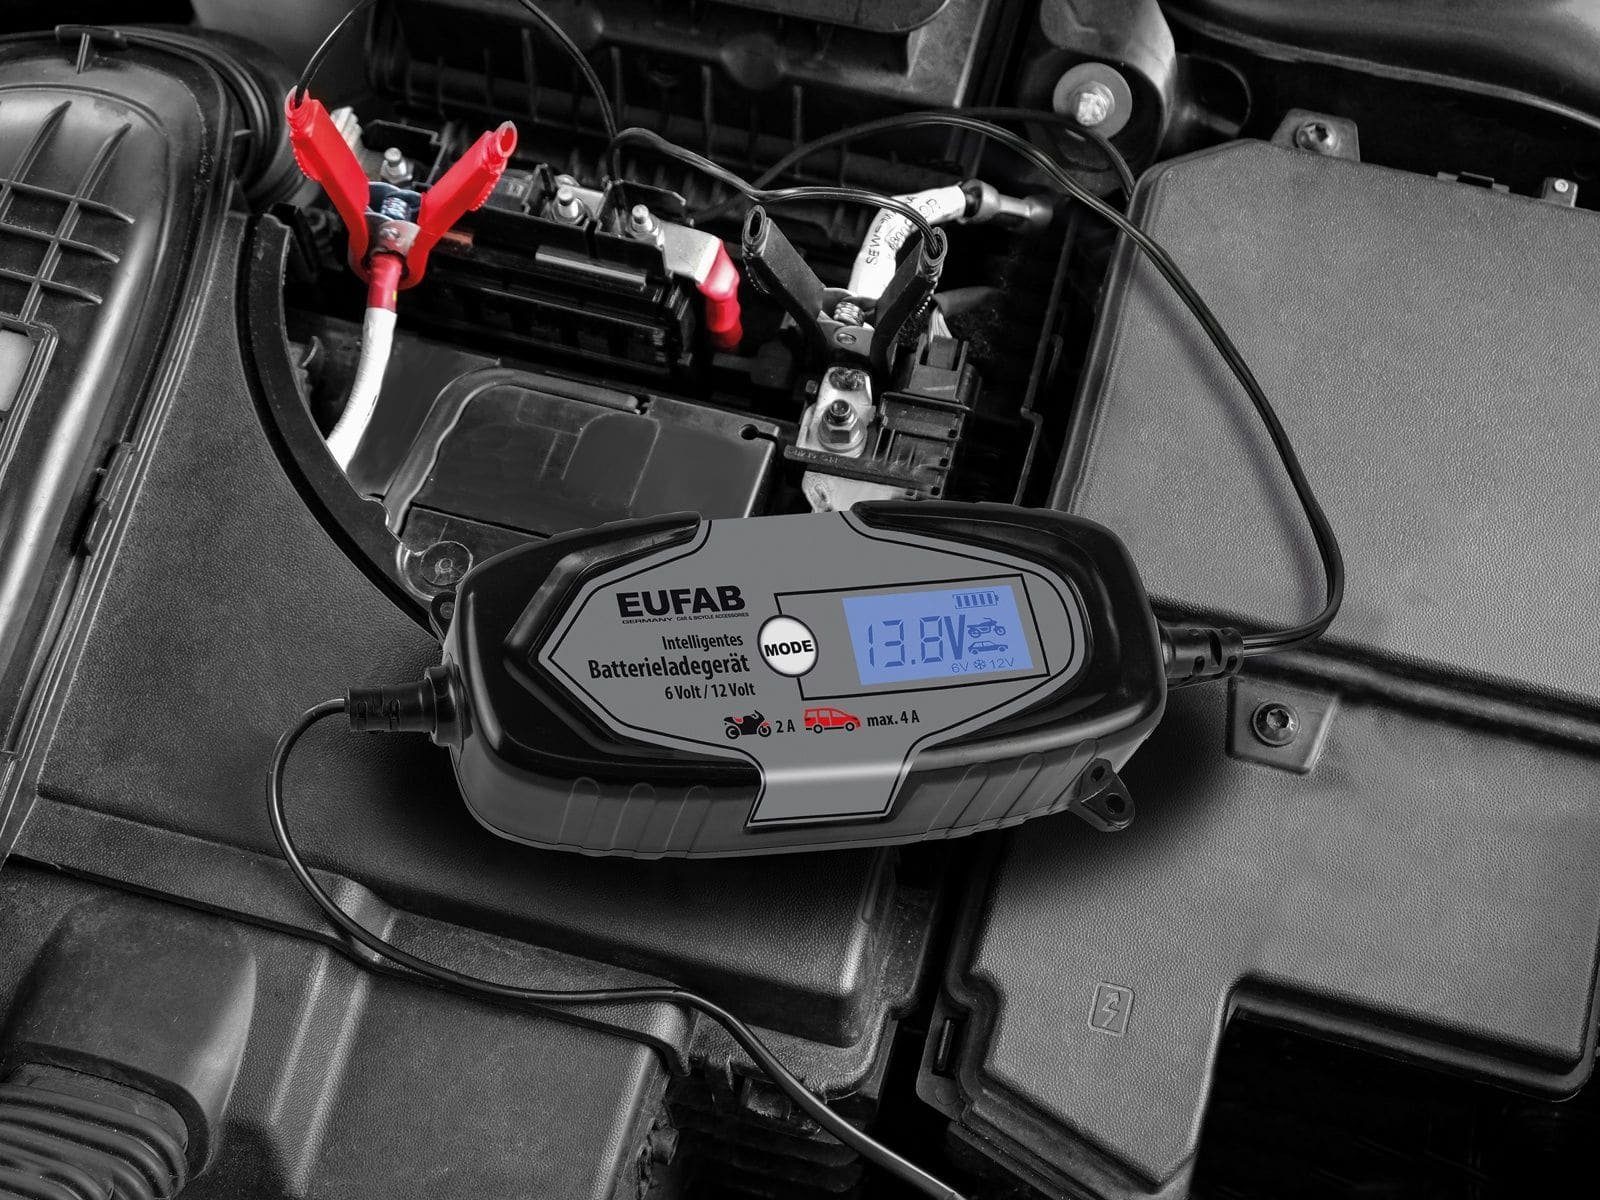 EUFAB EUFAB 16647 Autobatterie-Ladegerät (4000 mA), Vollautomatischer  mikroprozessorgesteuerter Ladevorgang in 9 Ladestufen